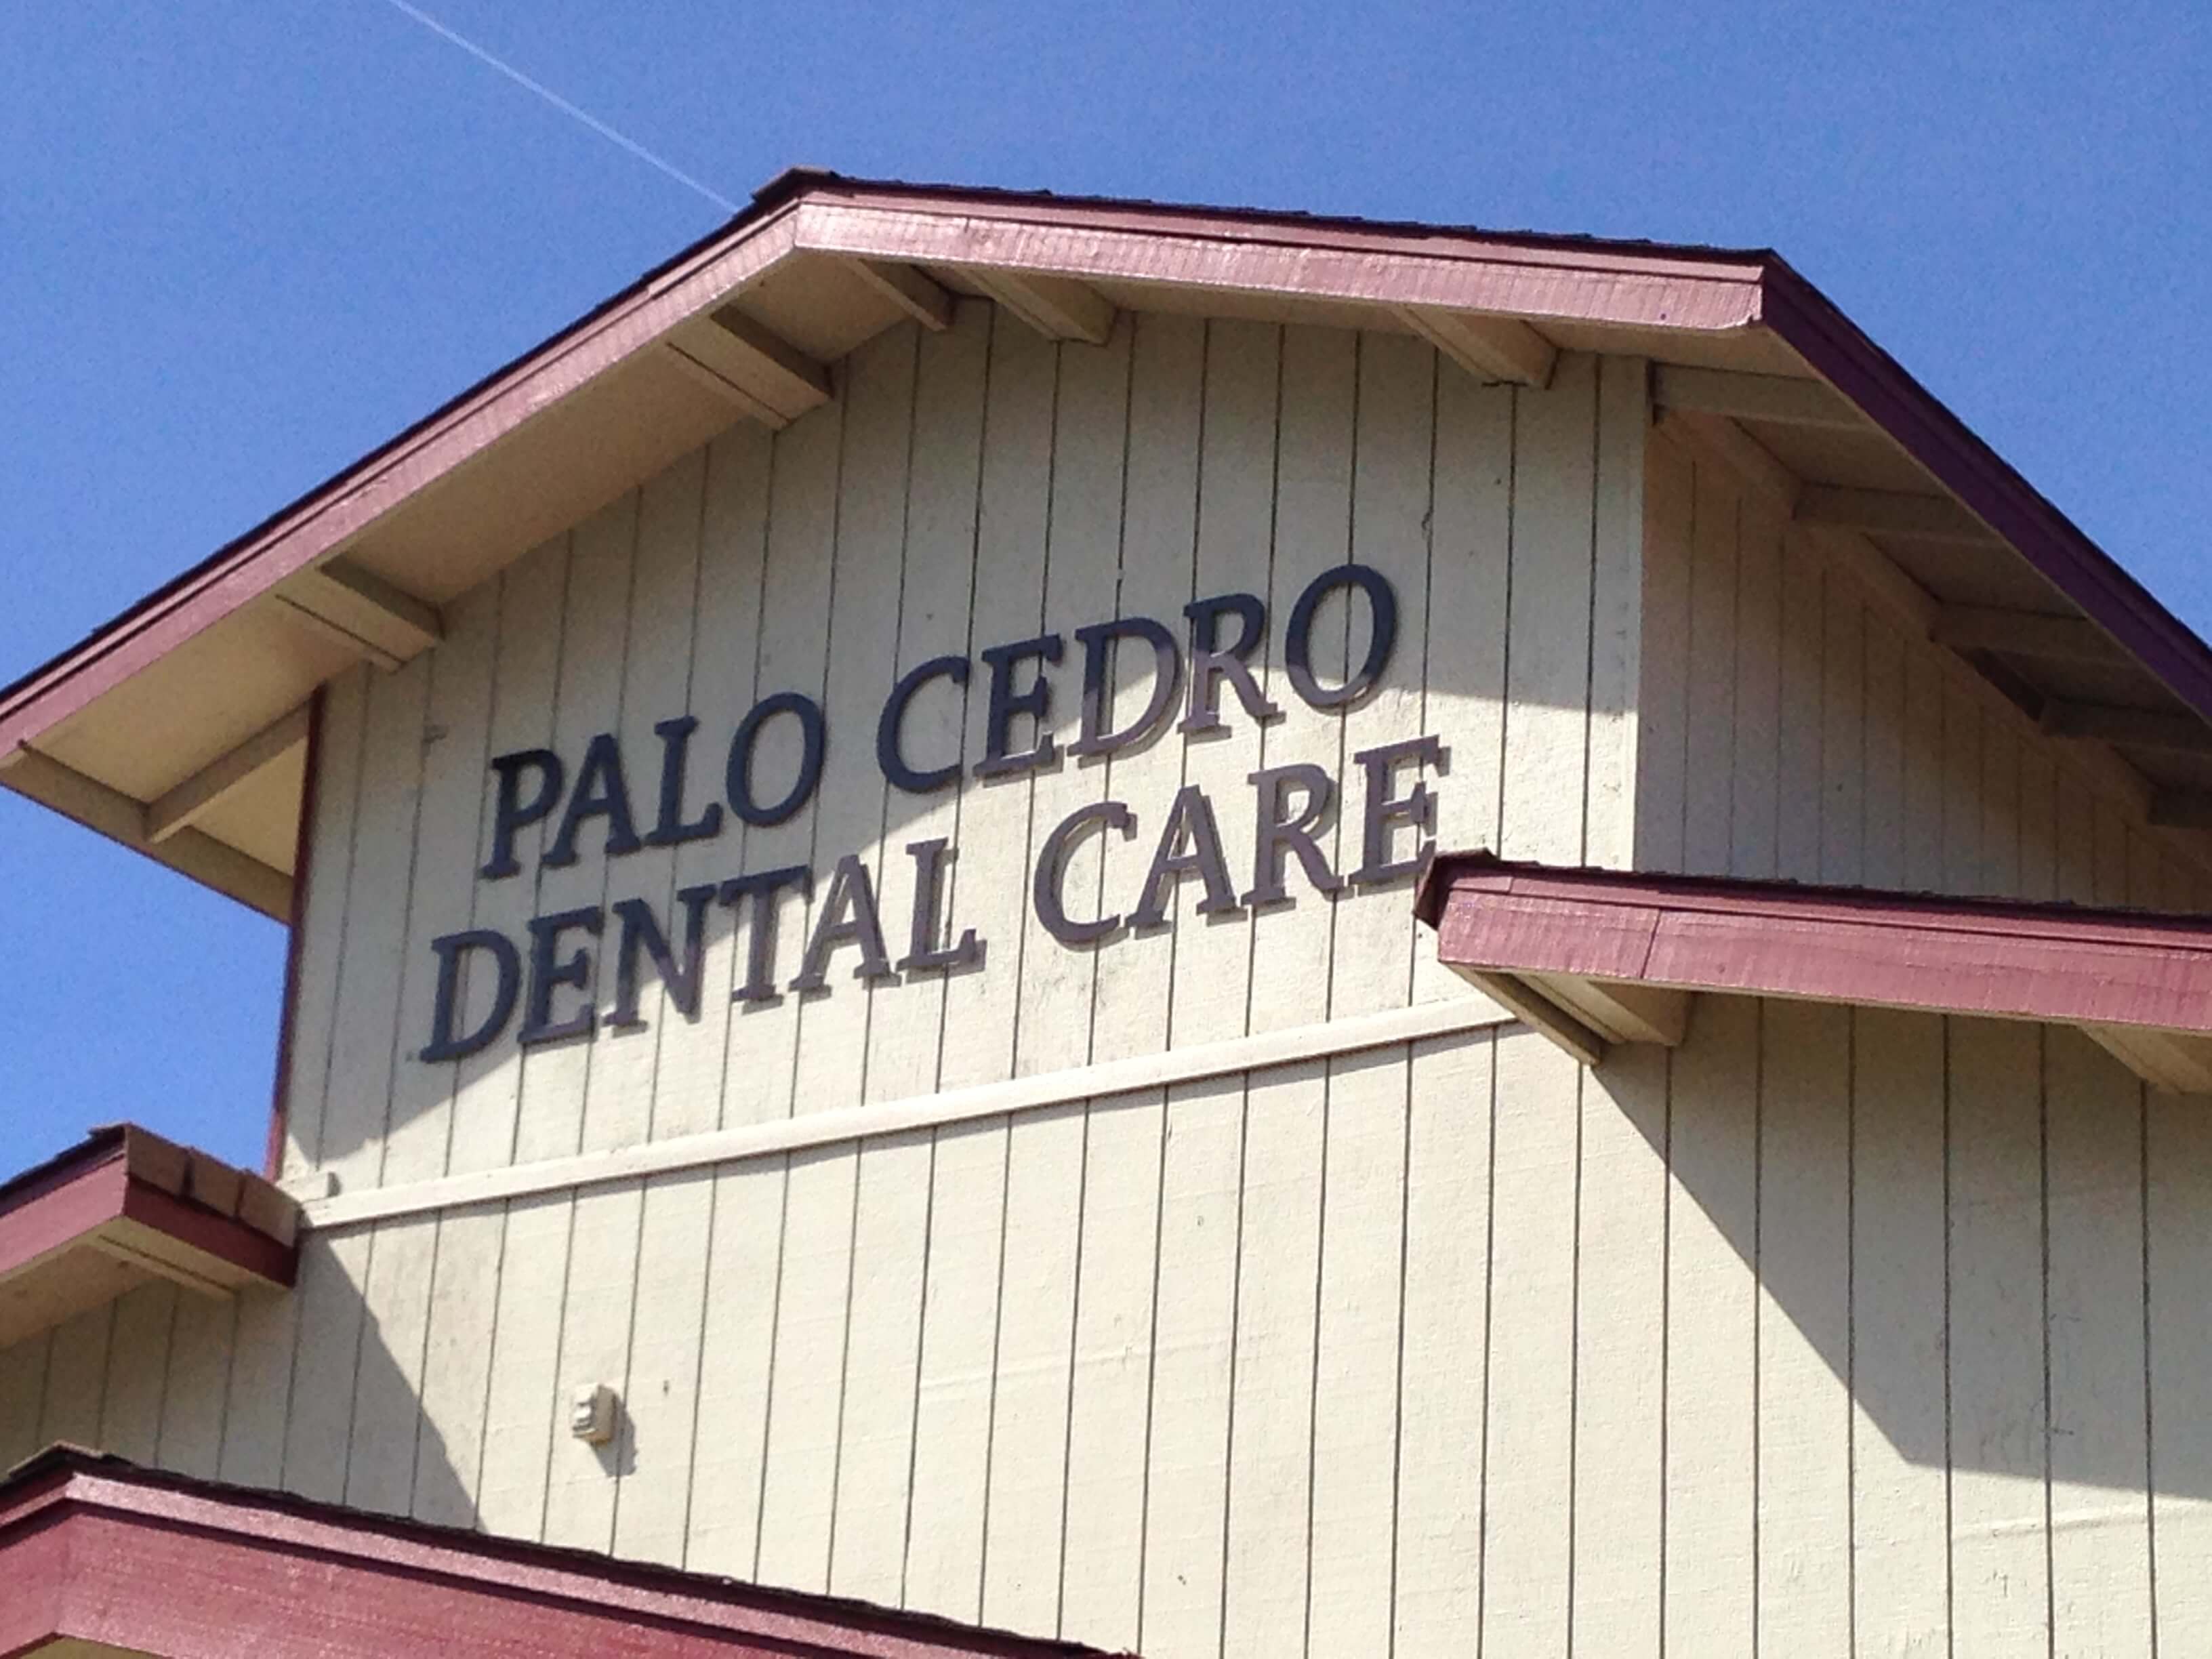 Palo Cedro Dental Care